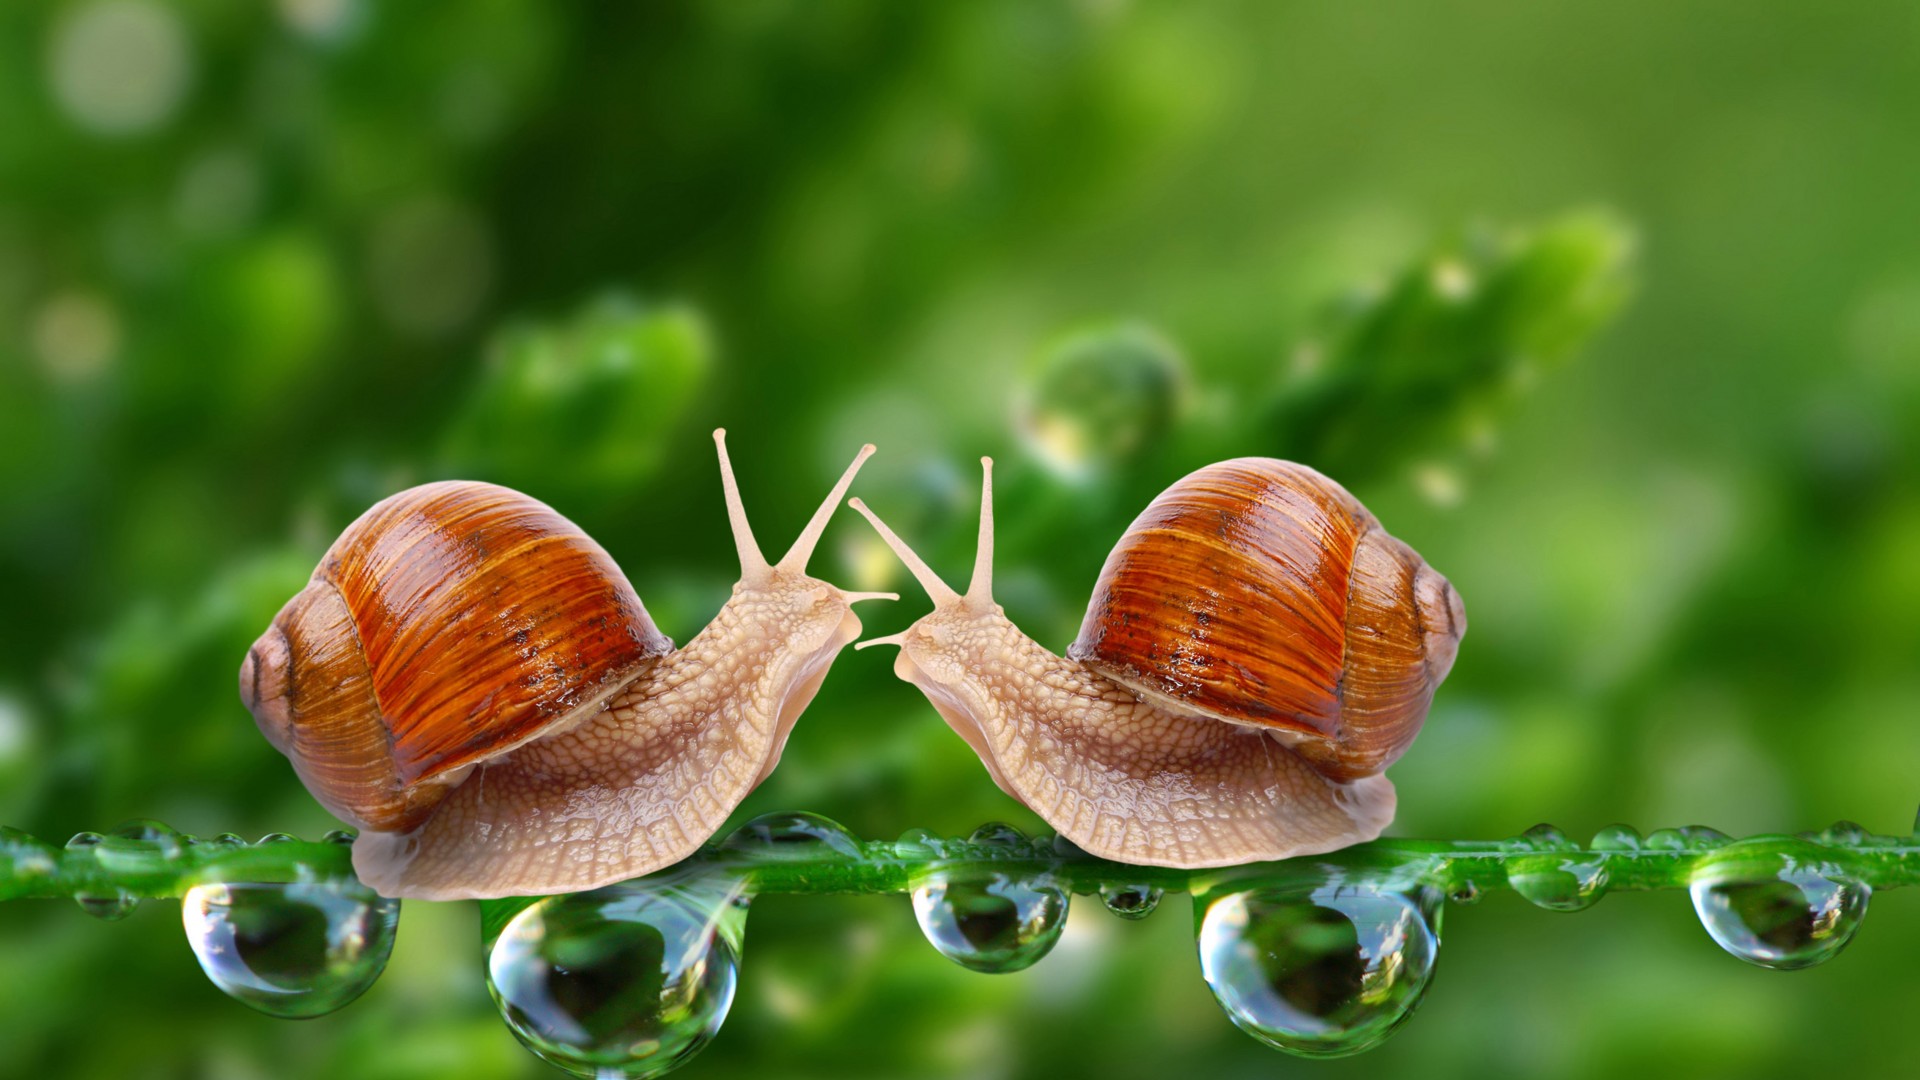 Snail, 5k, 4k wallpaper, water drops, green, nature, insects, close (horizontal)